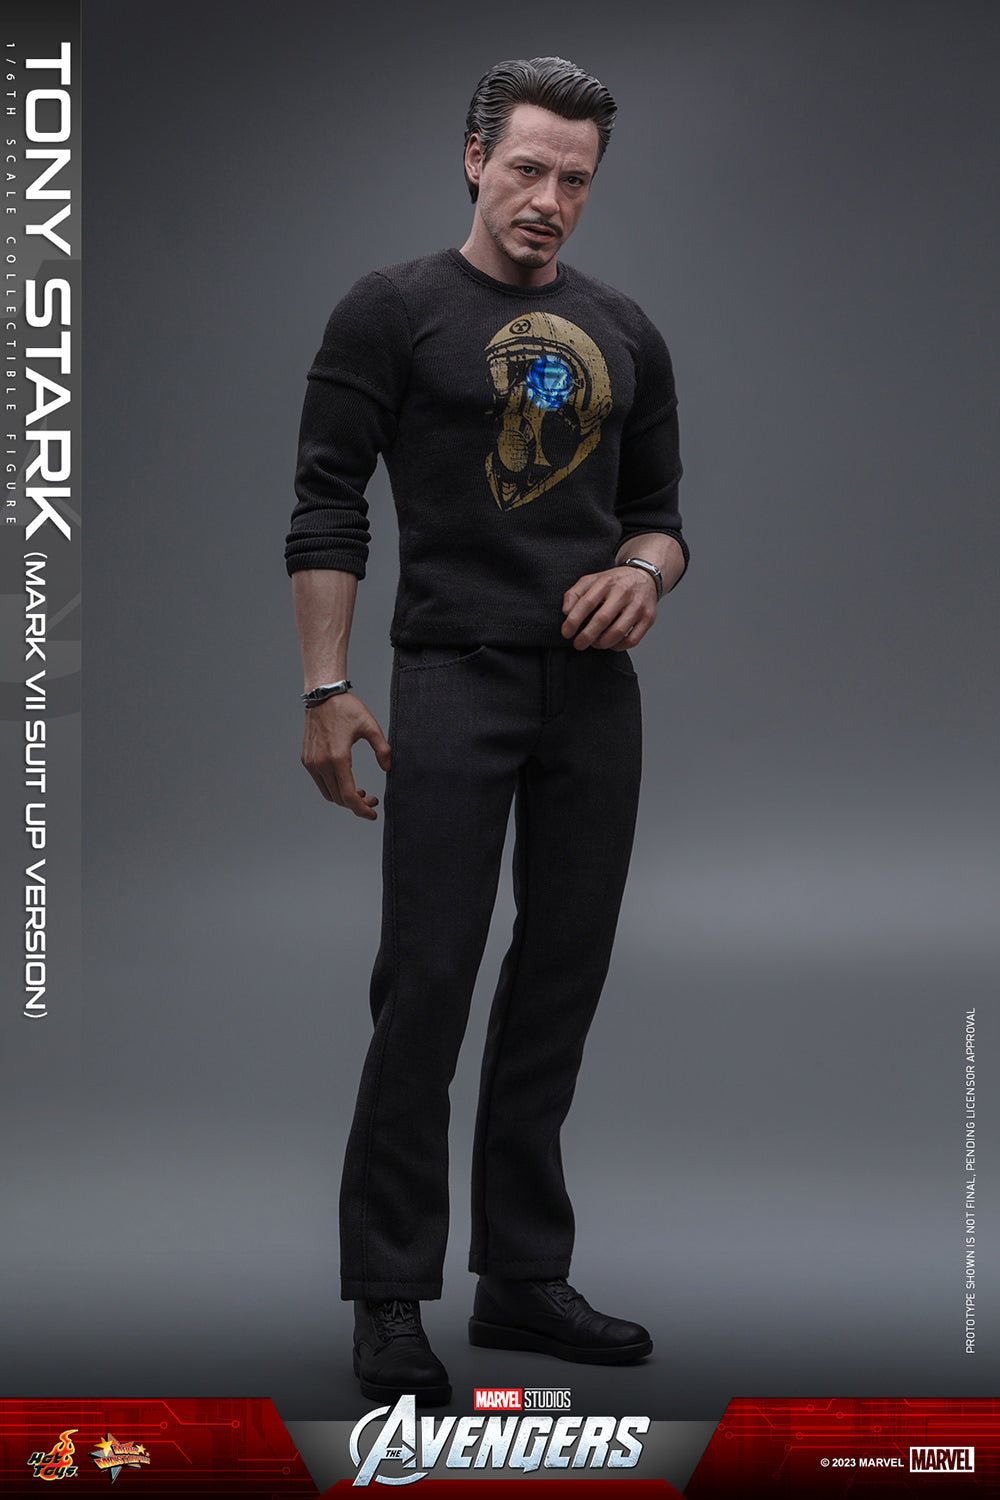 Tony Stark (Mark VII Suit Up Version) 1/6 Scale Figure